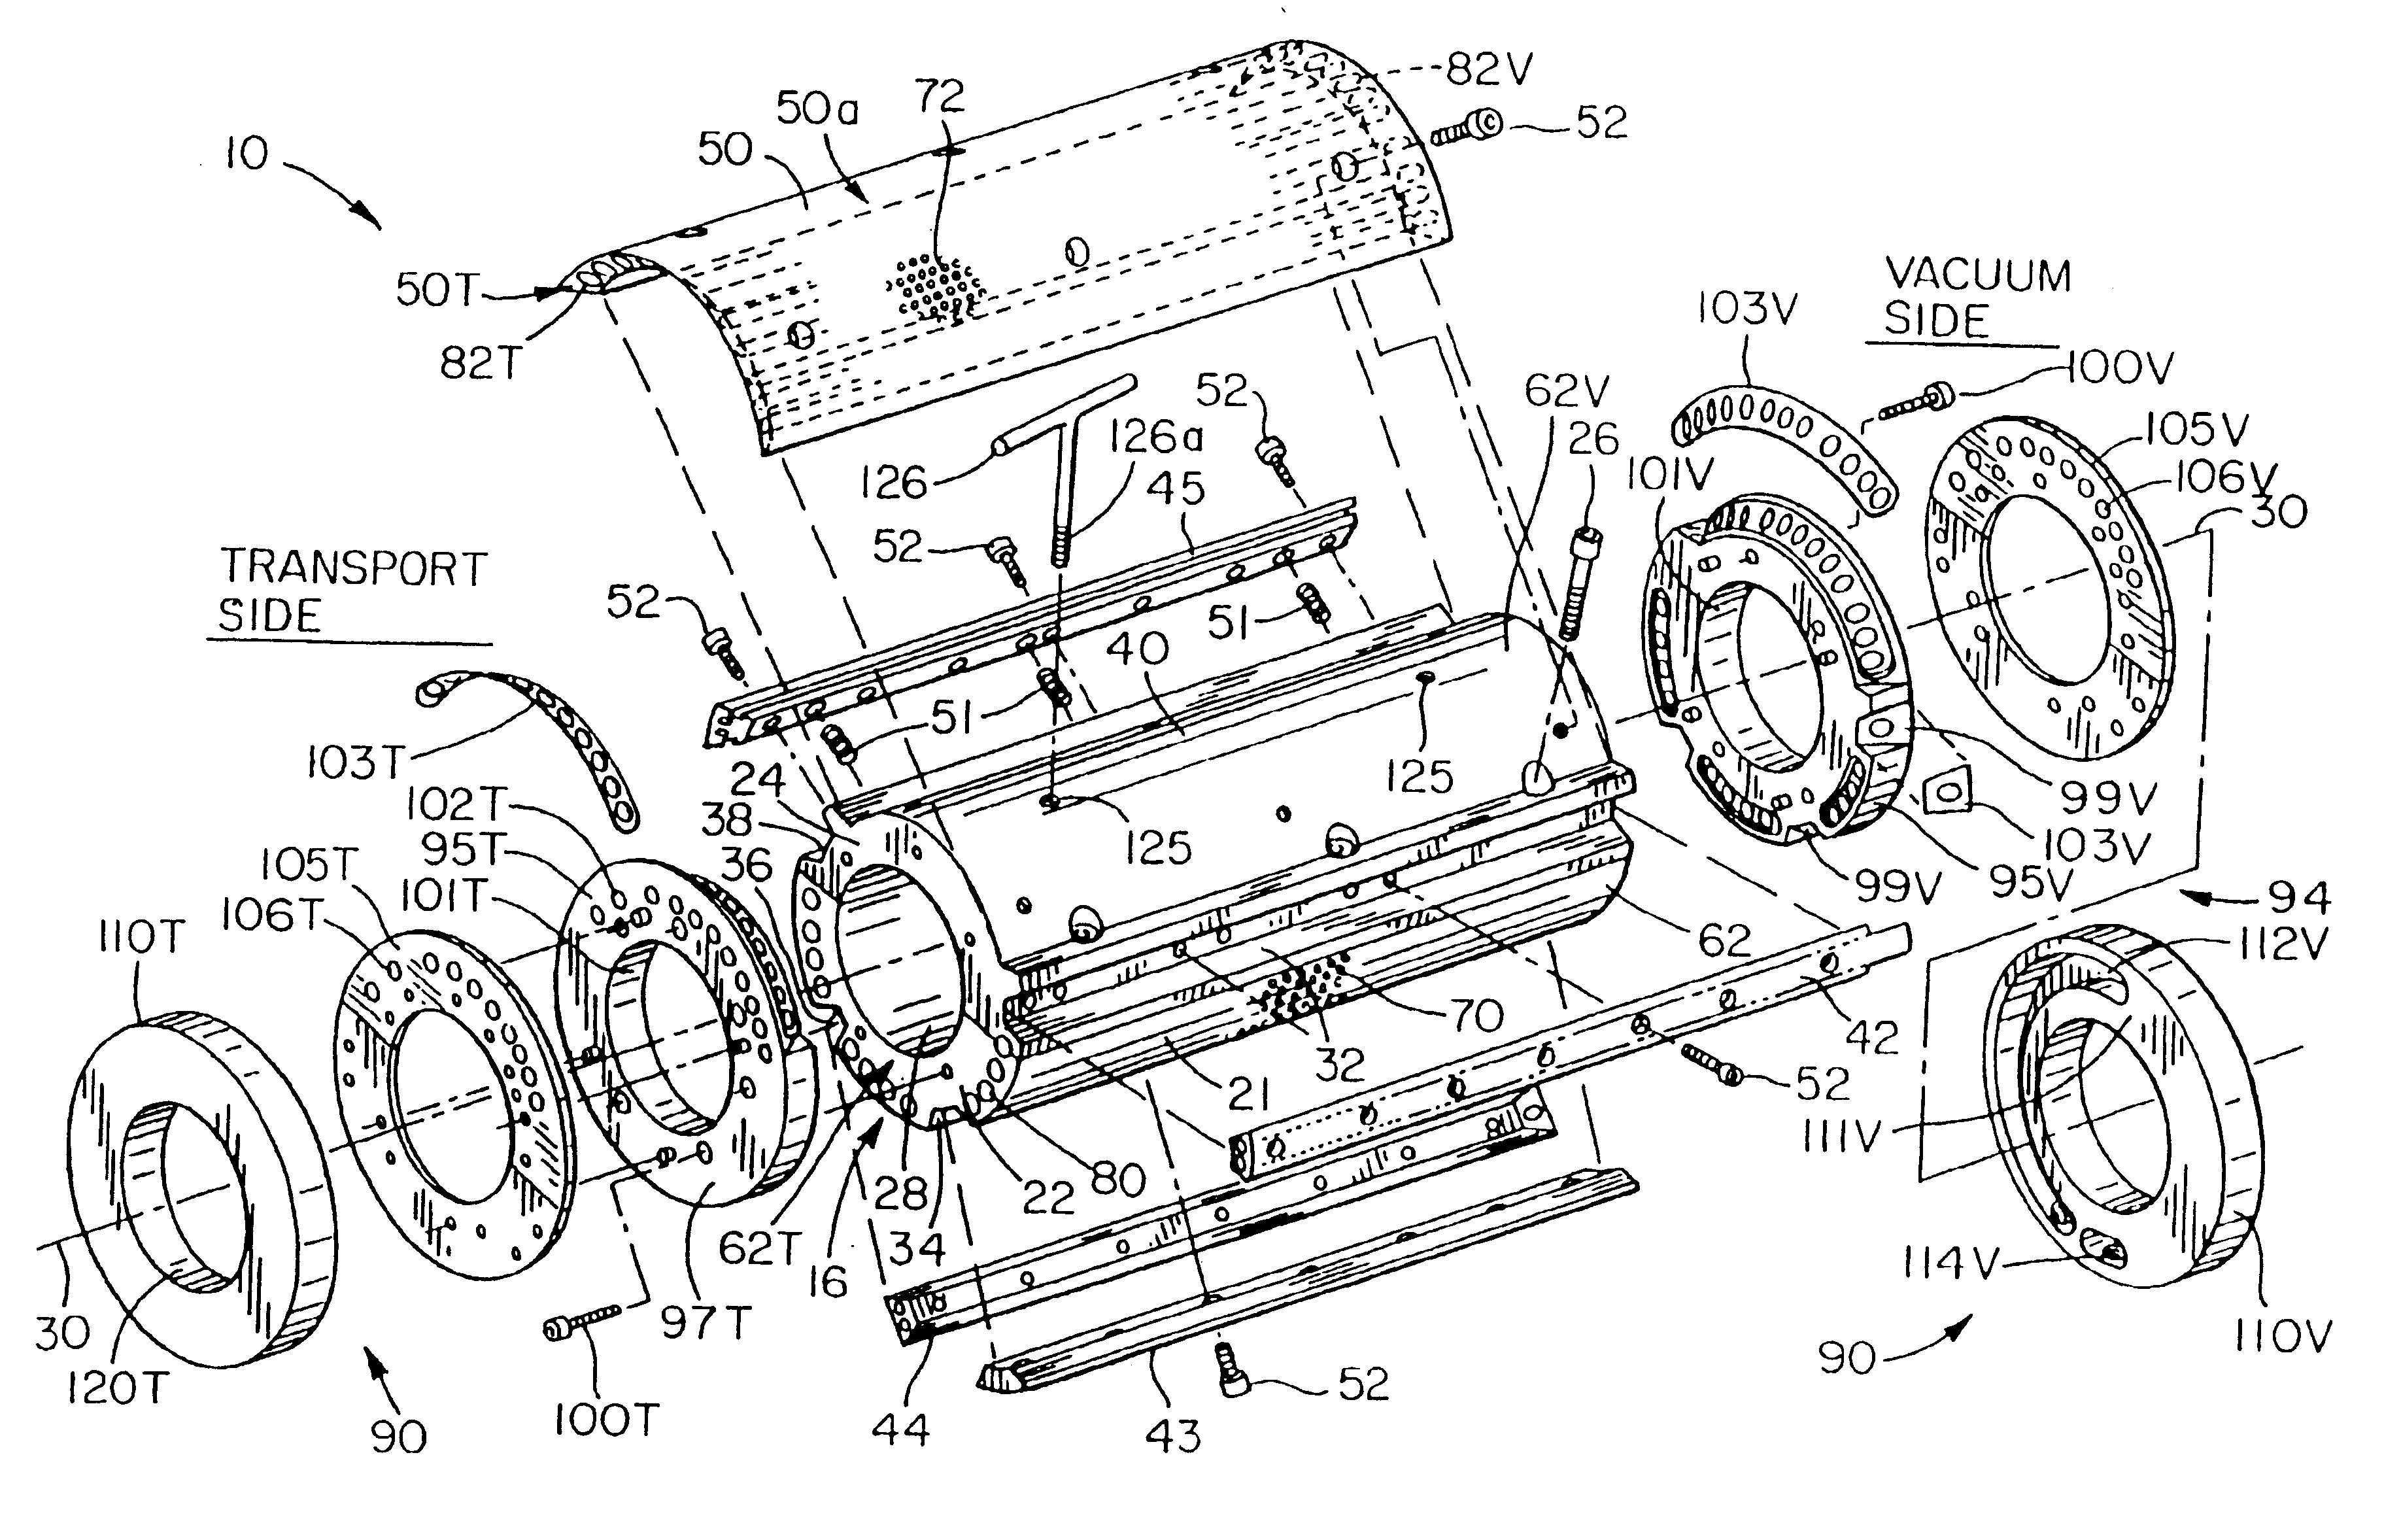 Panel cutting apparatus